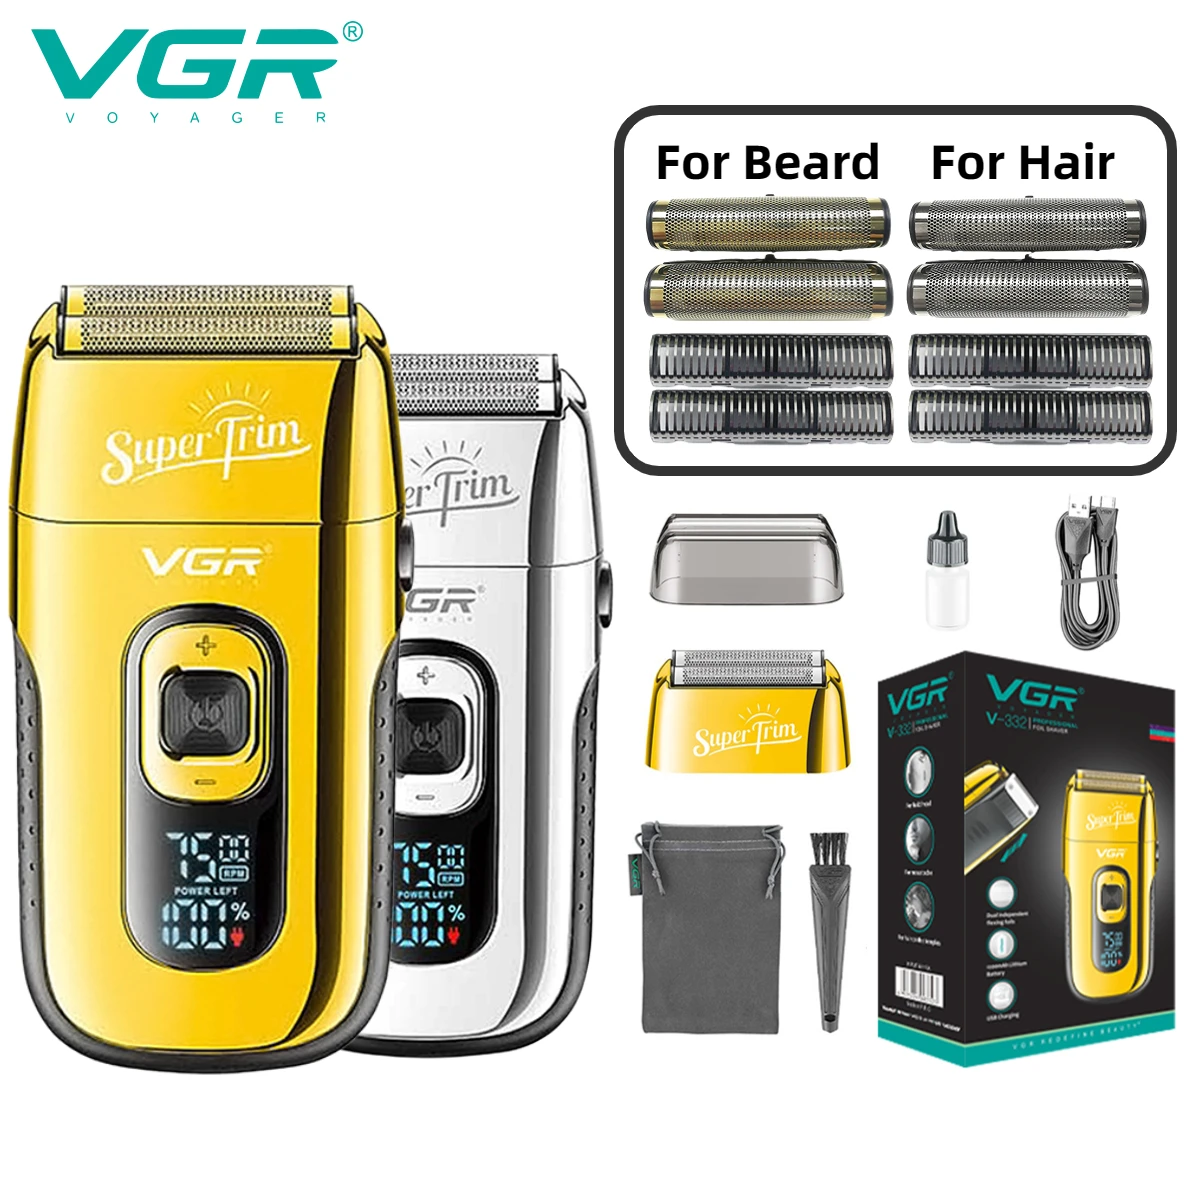 

VGR Beard Shaver Professional Hair Trimmer Rechargeable Face Shaver LED Display Cordless Safety Men's Electric Face Shaver V-332